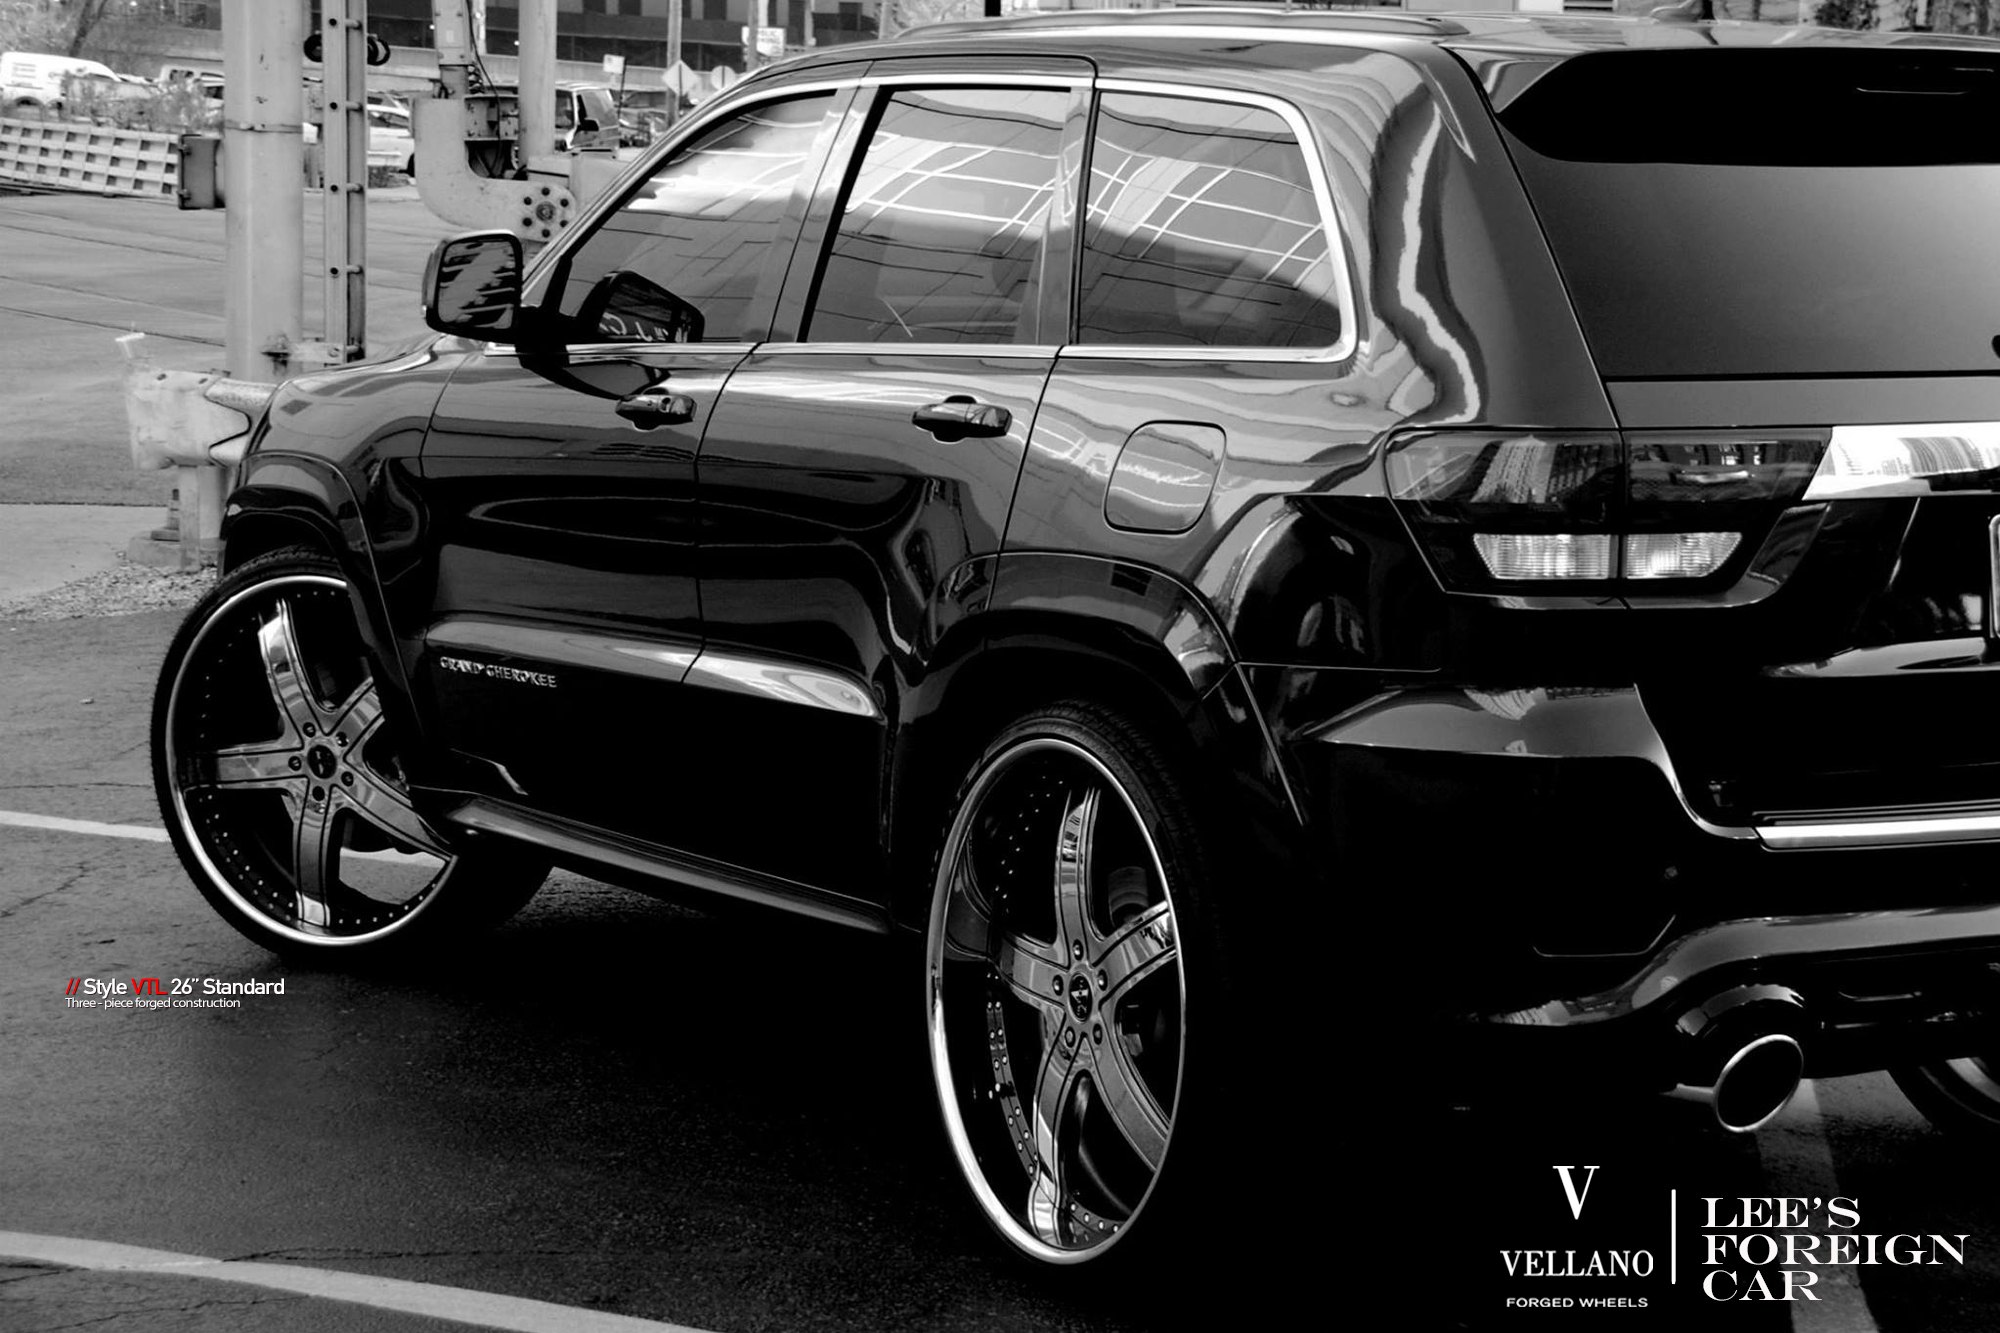 Black Jeep Grand Cherokee with Custom Vellano Wheels - Photo by Vellano